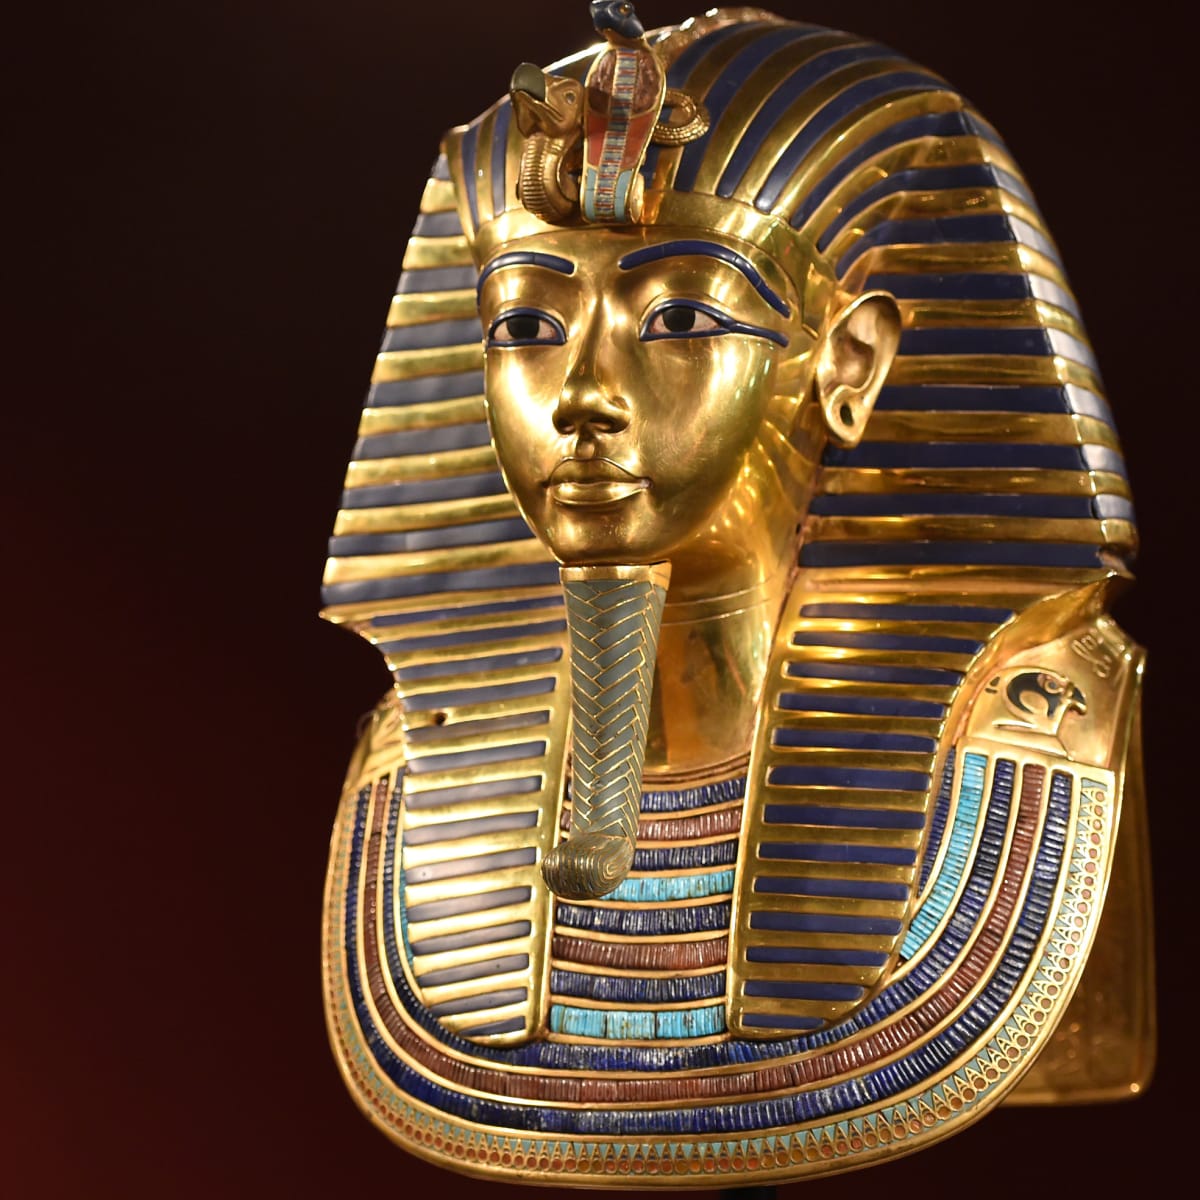 1922- Pharaoh Tutankhamun is discovered